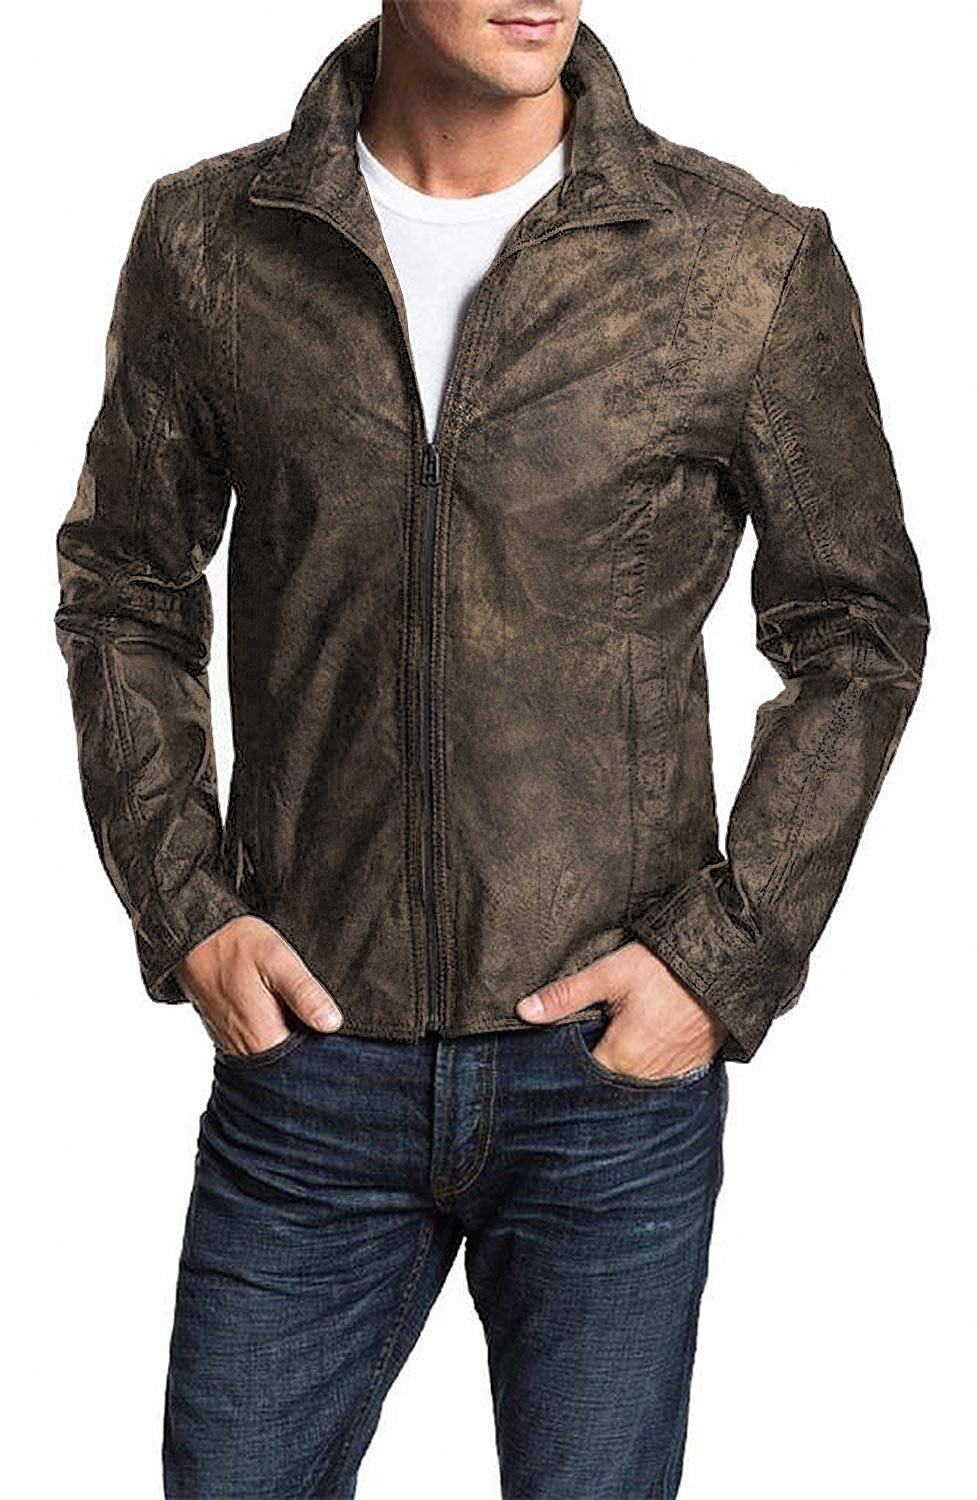 Leather Jackets Hub Mens Genuine Lambskin Leather Jacket (Black, Classic Jacket) - 1501304